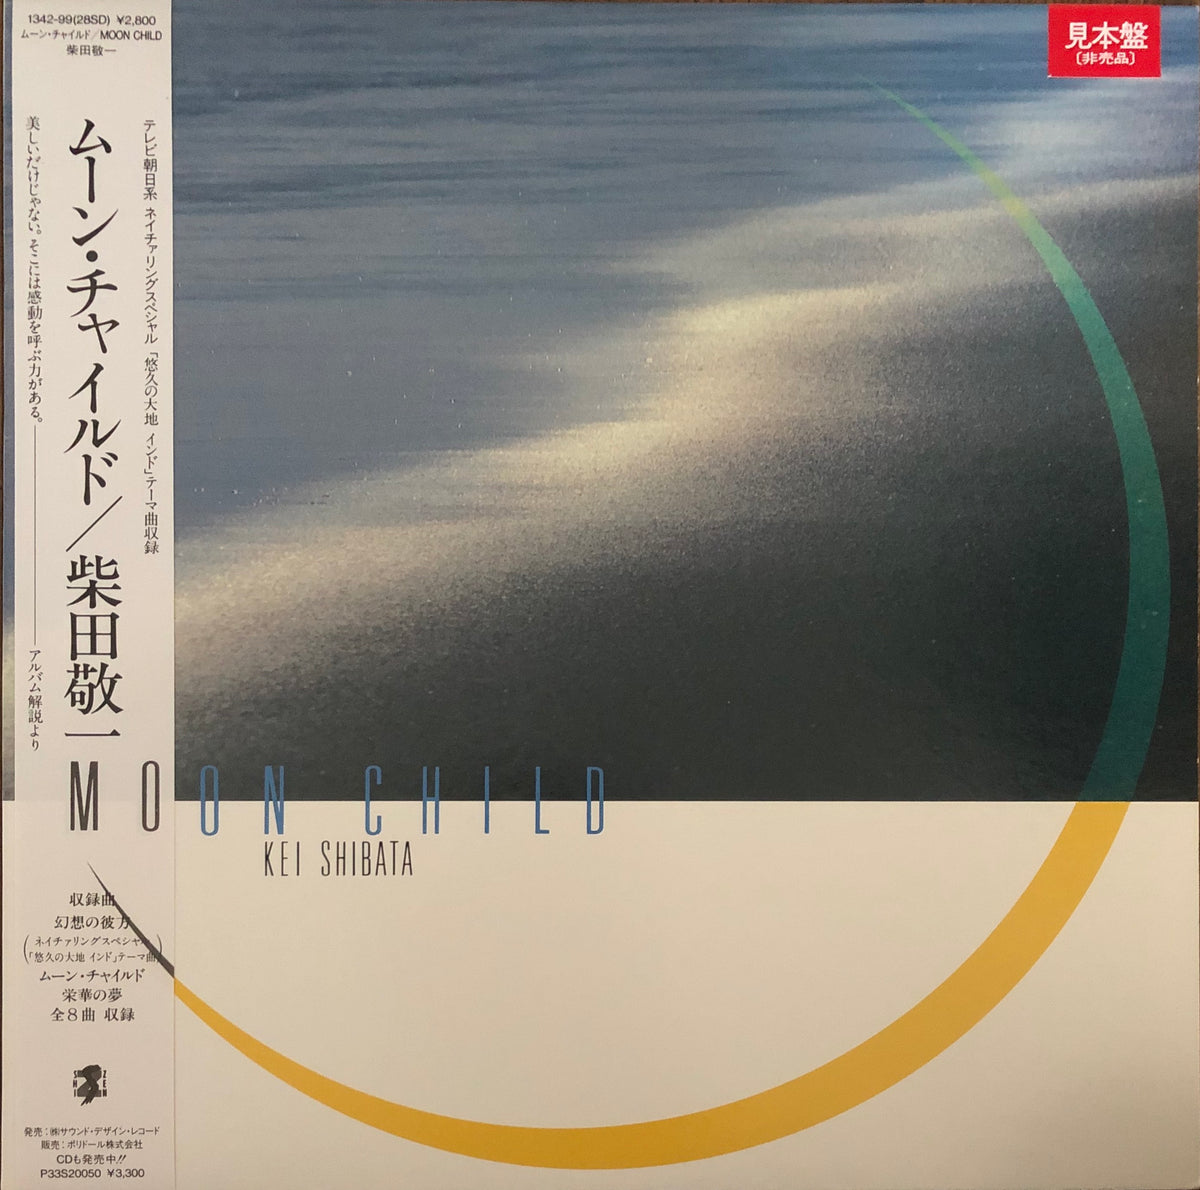 Kei Shibata u003d 柴田敬一 u200e– Moon Child u003d ムーン・チャイルド – Galapagos Records